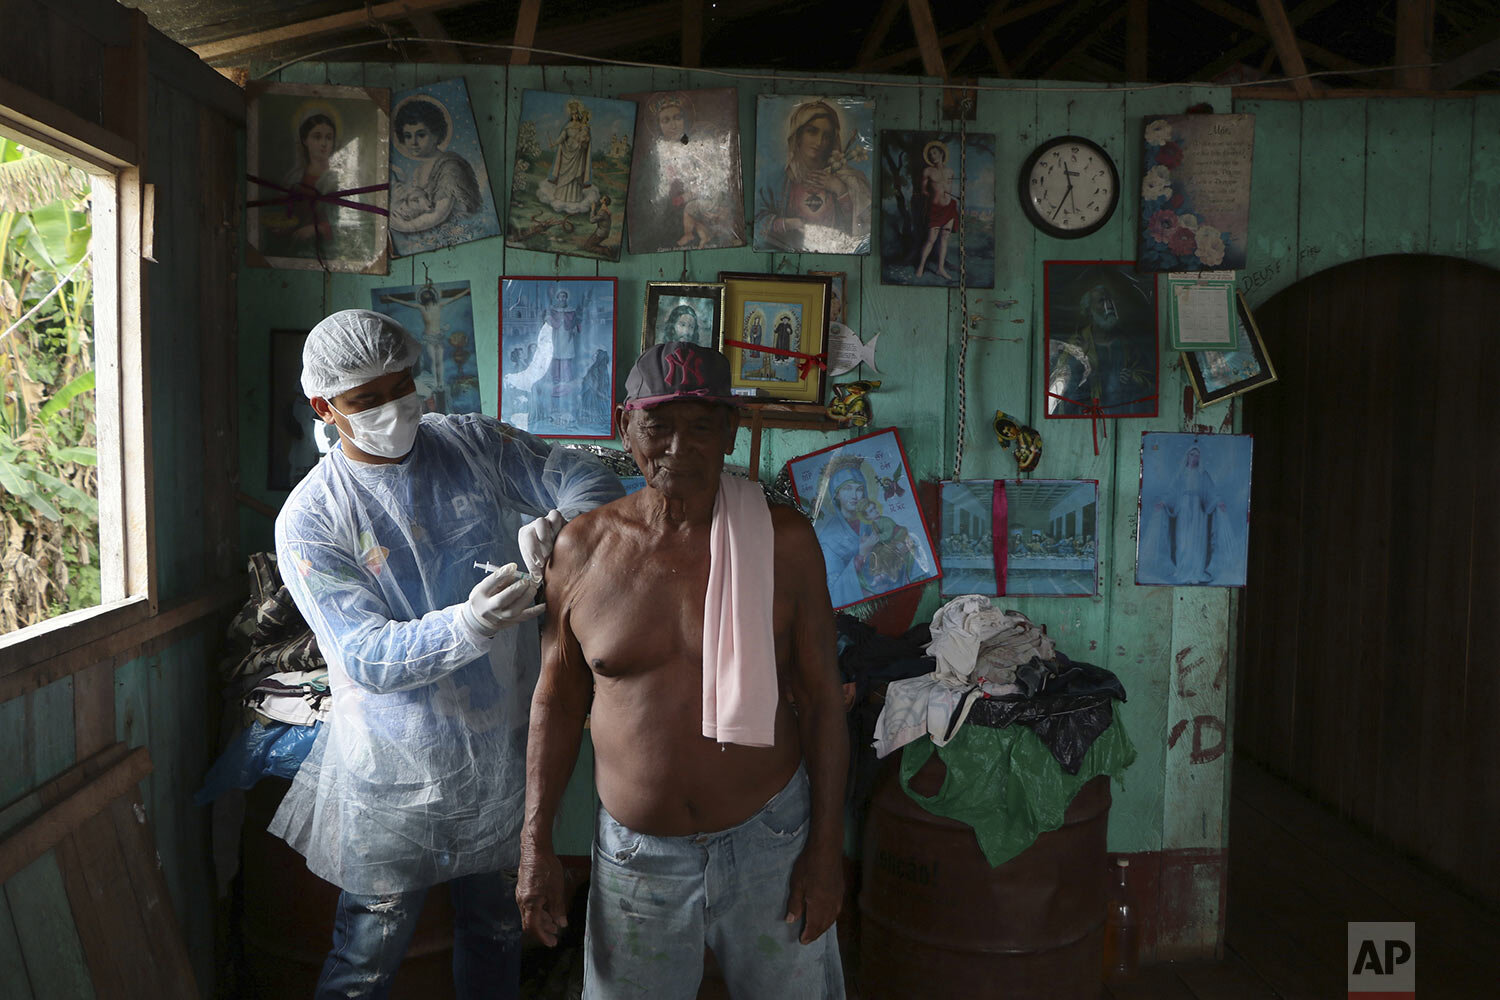  Francisco de Souza Fereira, 70, gets a dose of the AstraZeneca COVID-19 vaccine in the Pupuri community along the Purus River in the Labrea municipality, Amazonas state, Brazil, Feb. 12, 2021. (AP Photo/Edmar Barros) 